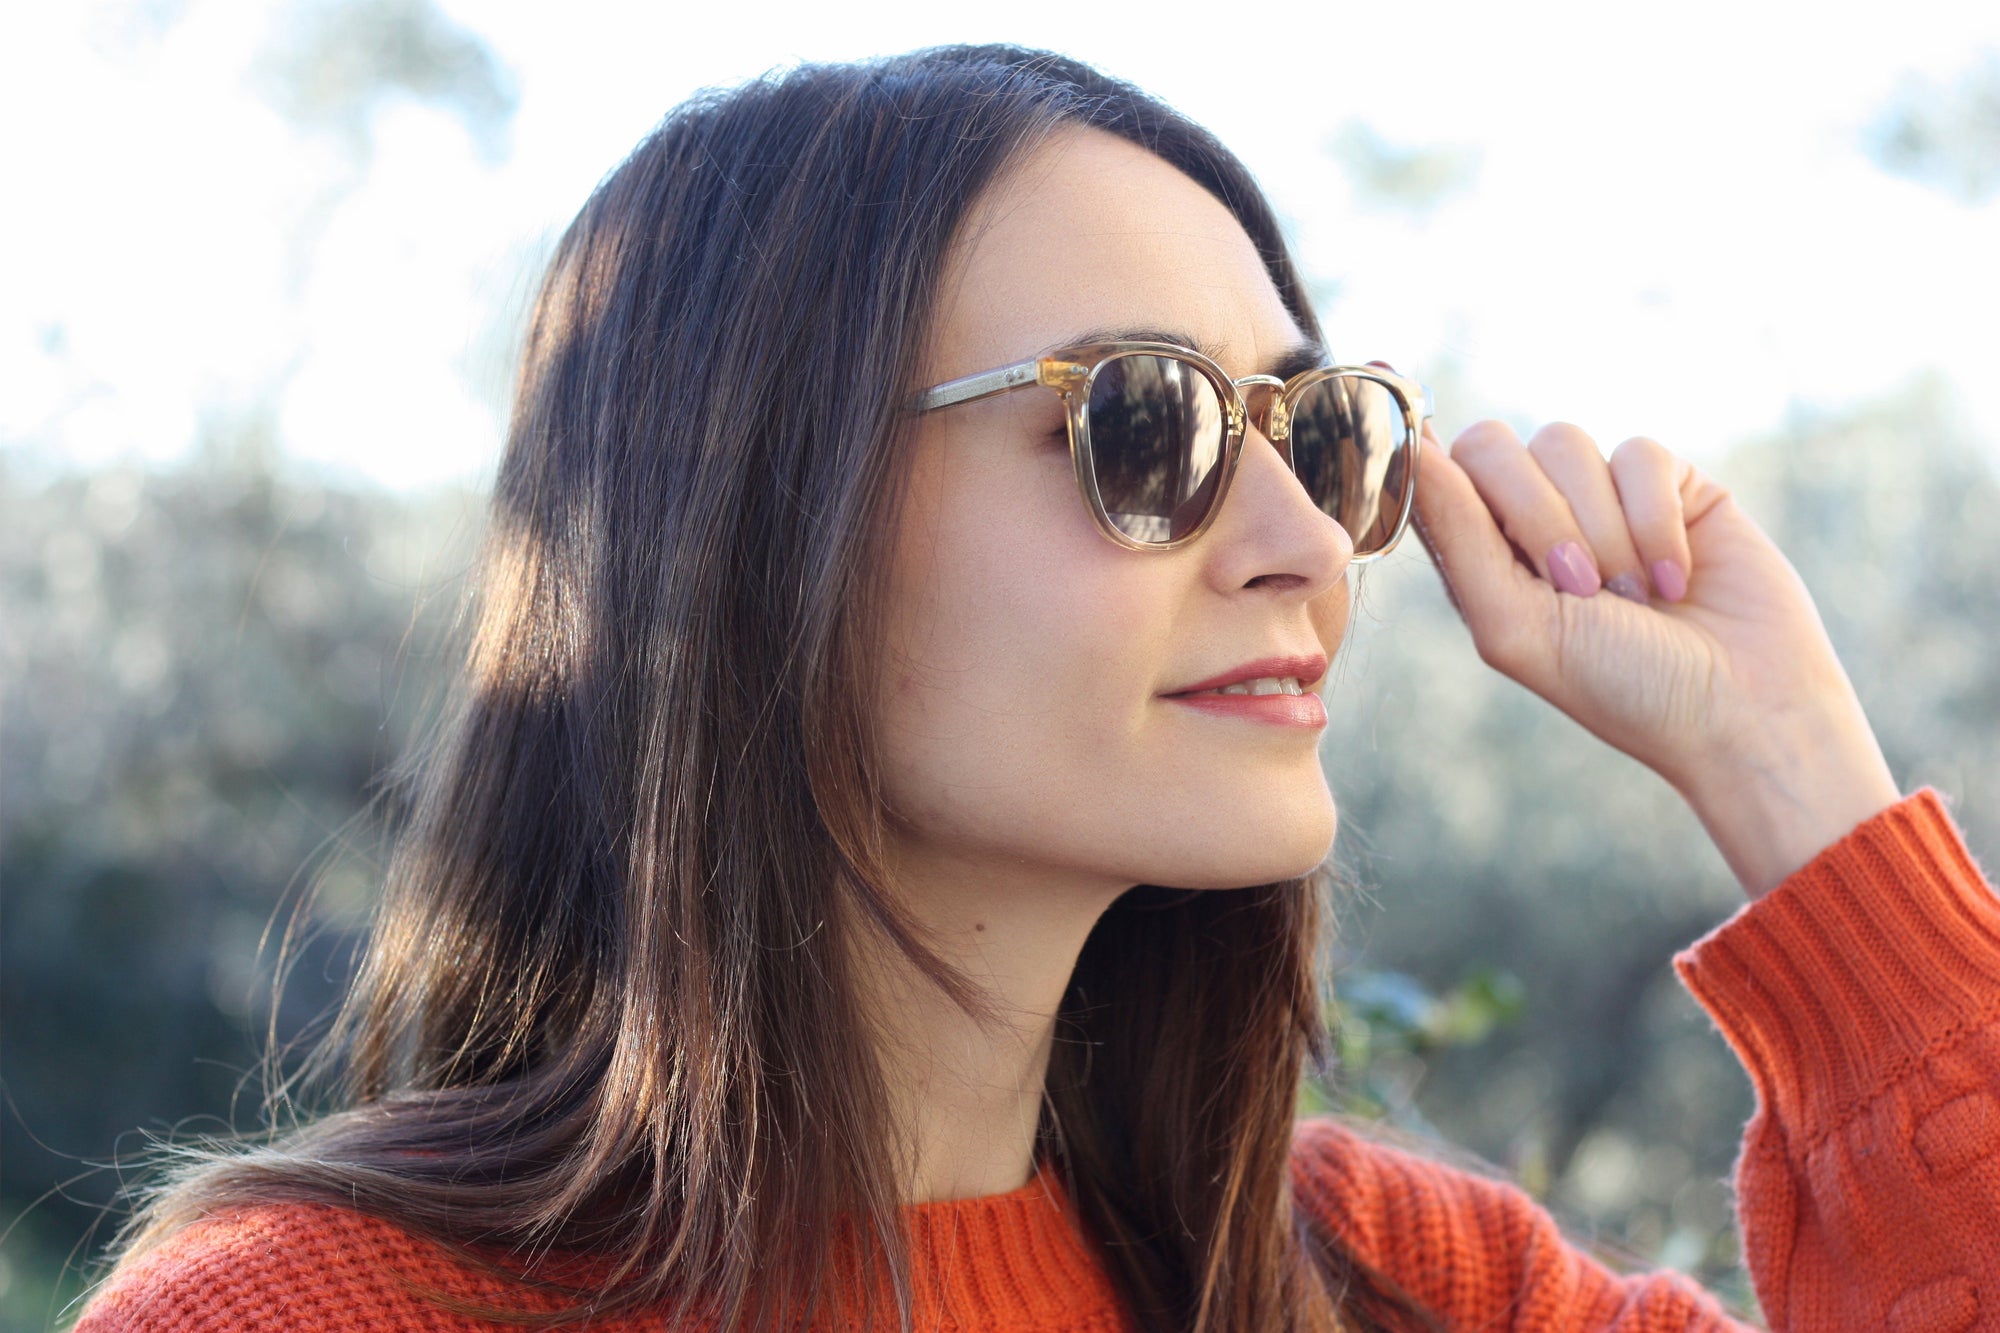 Do mirrored sunglasses reduce glare? | KOALAEYE OPTICAL